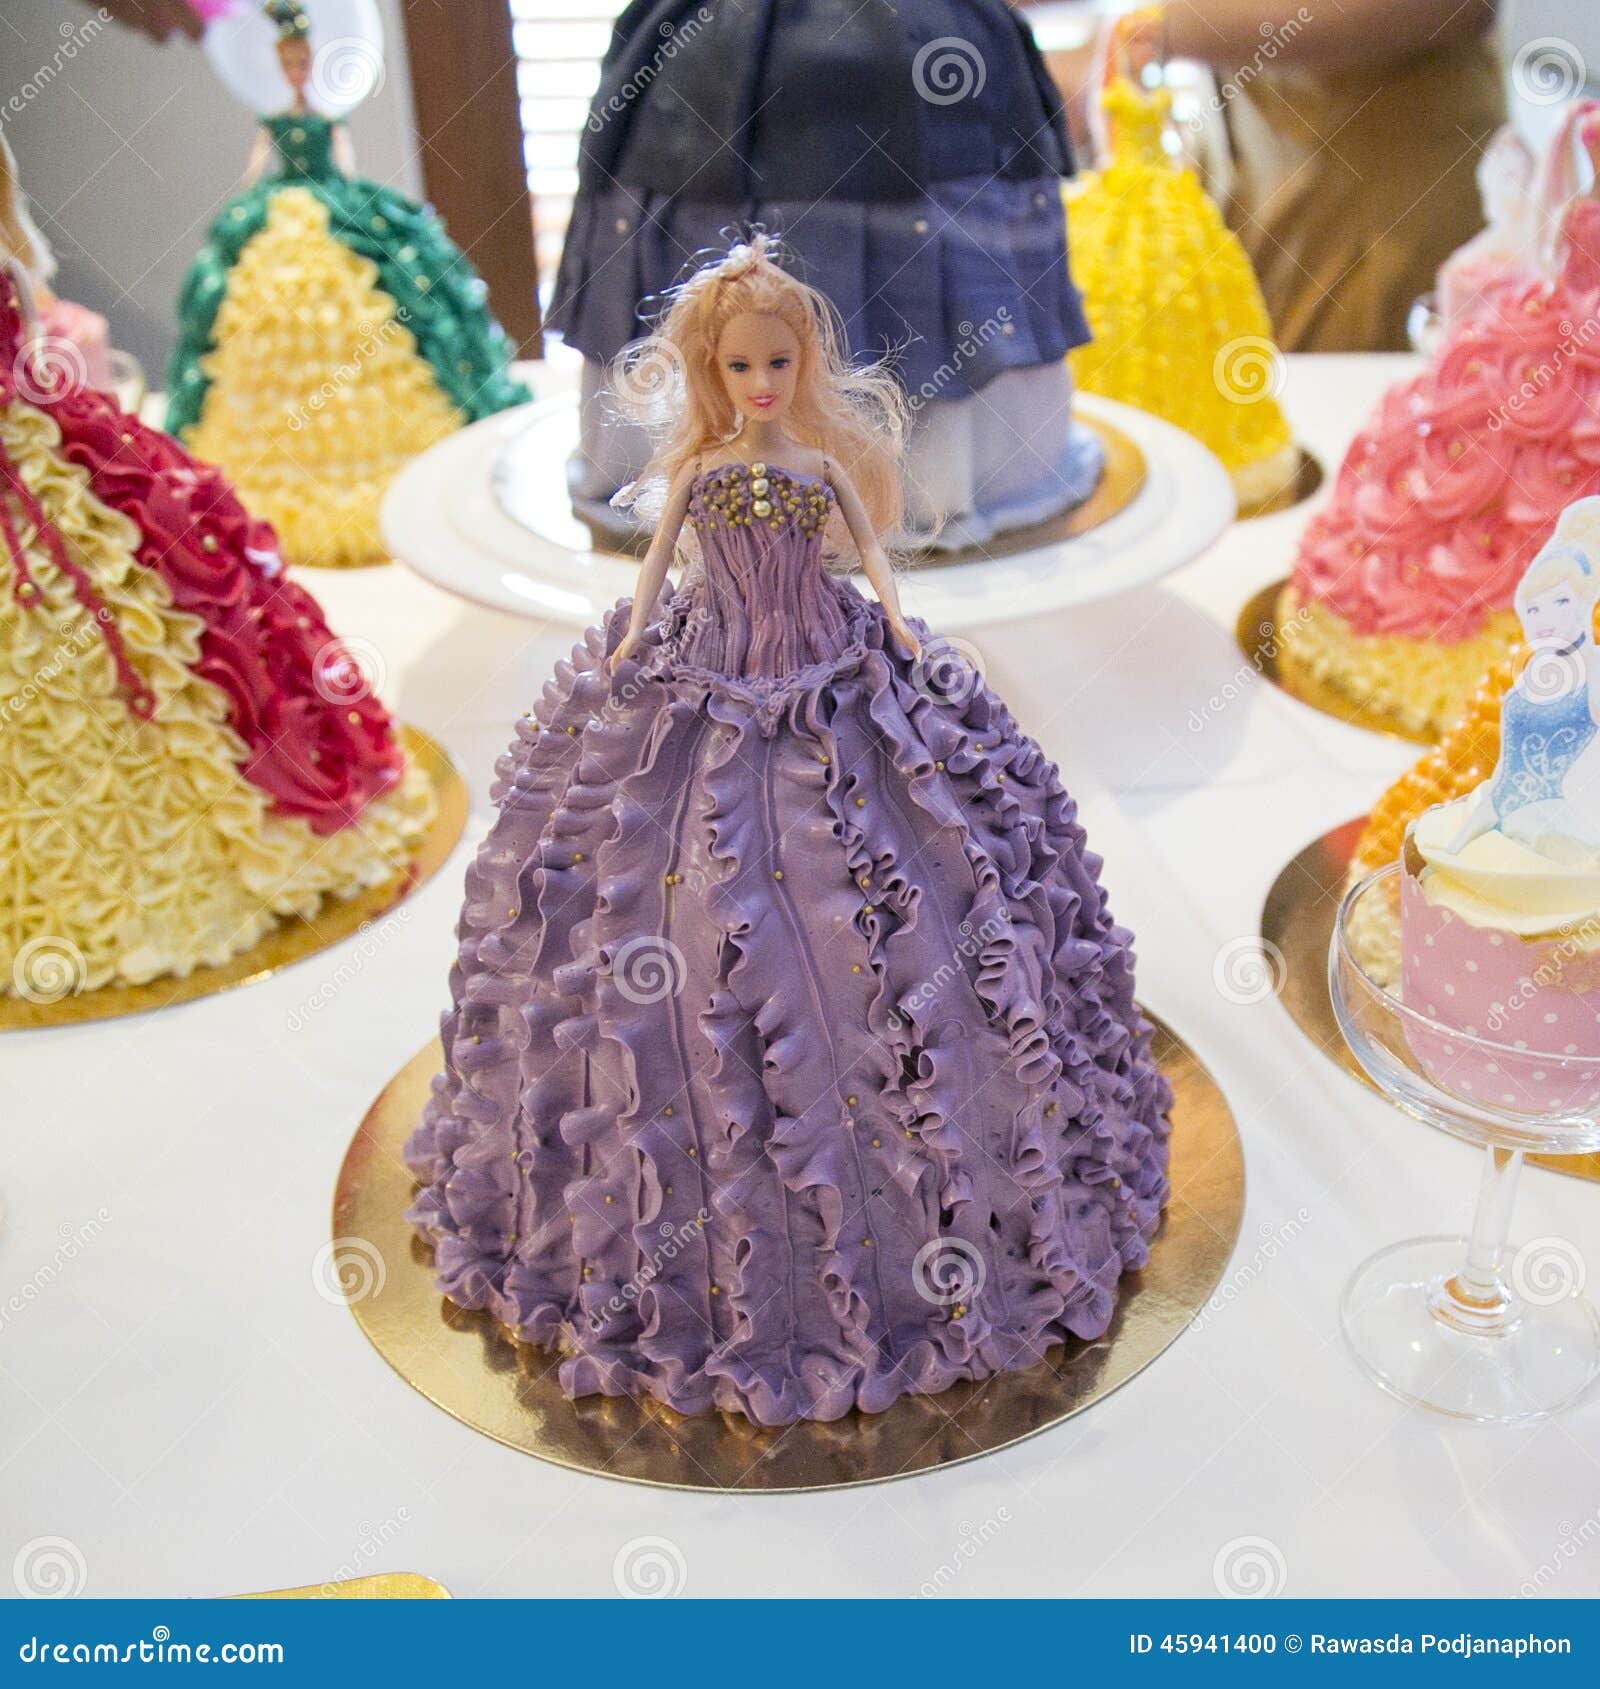 cakecakejelly: 3D 立體公主蛋糕